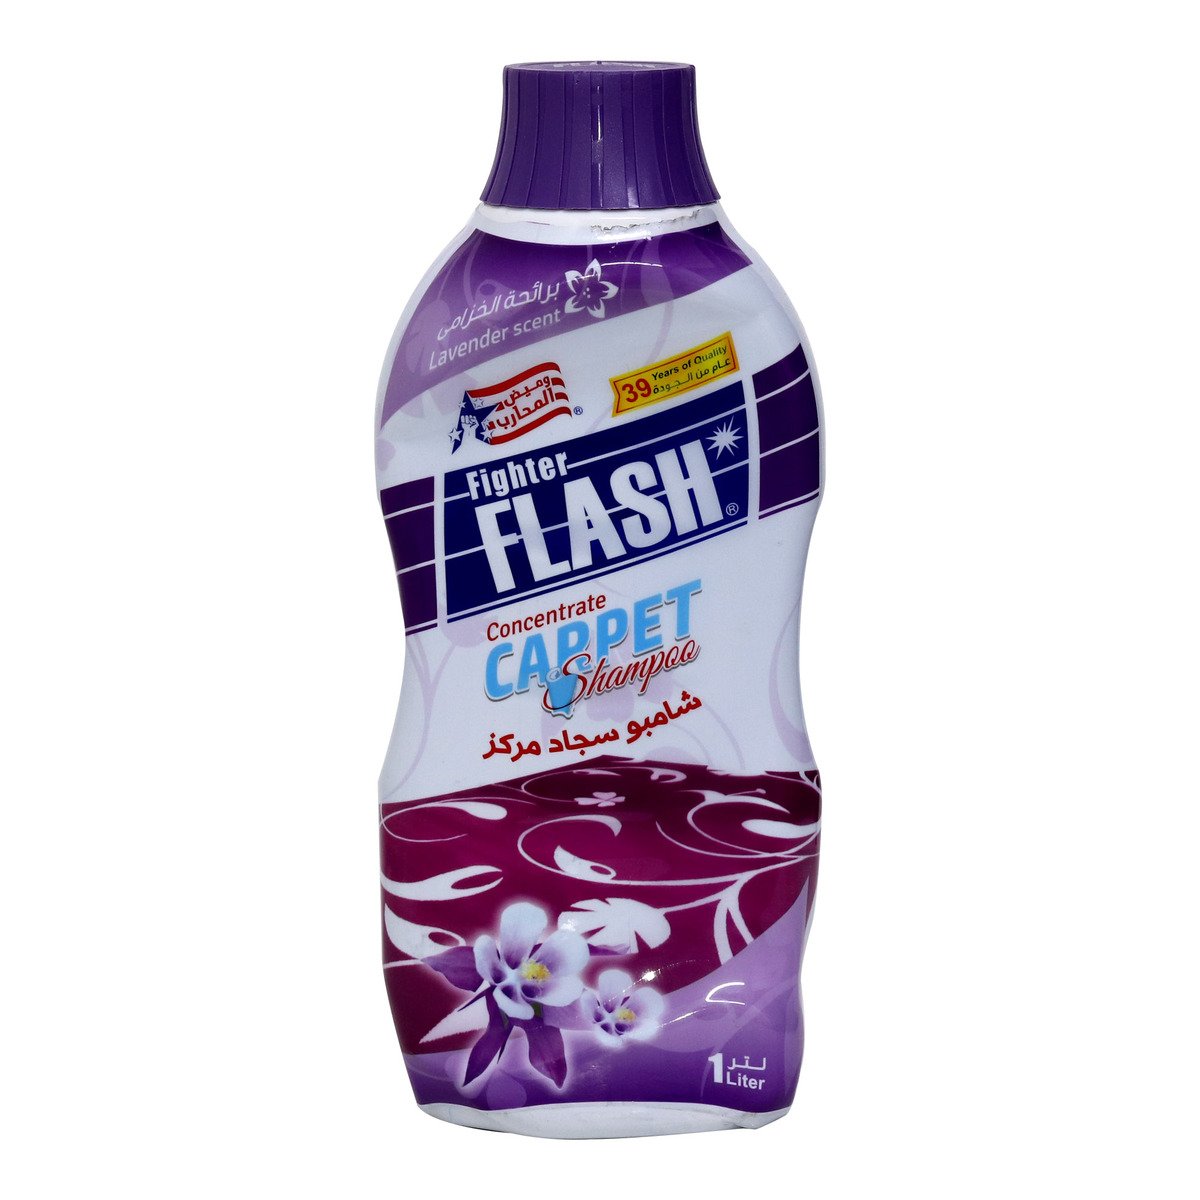 Fighter Flash Concentrate Carpet Shampoo Lavender 1Litre